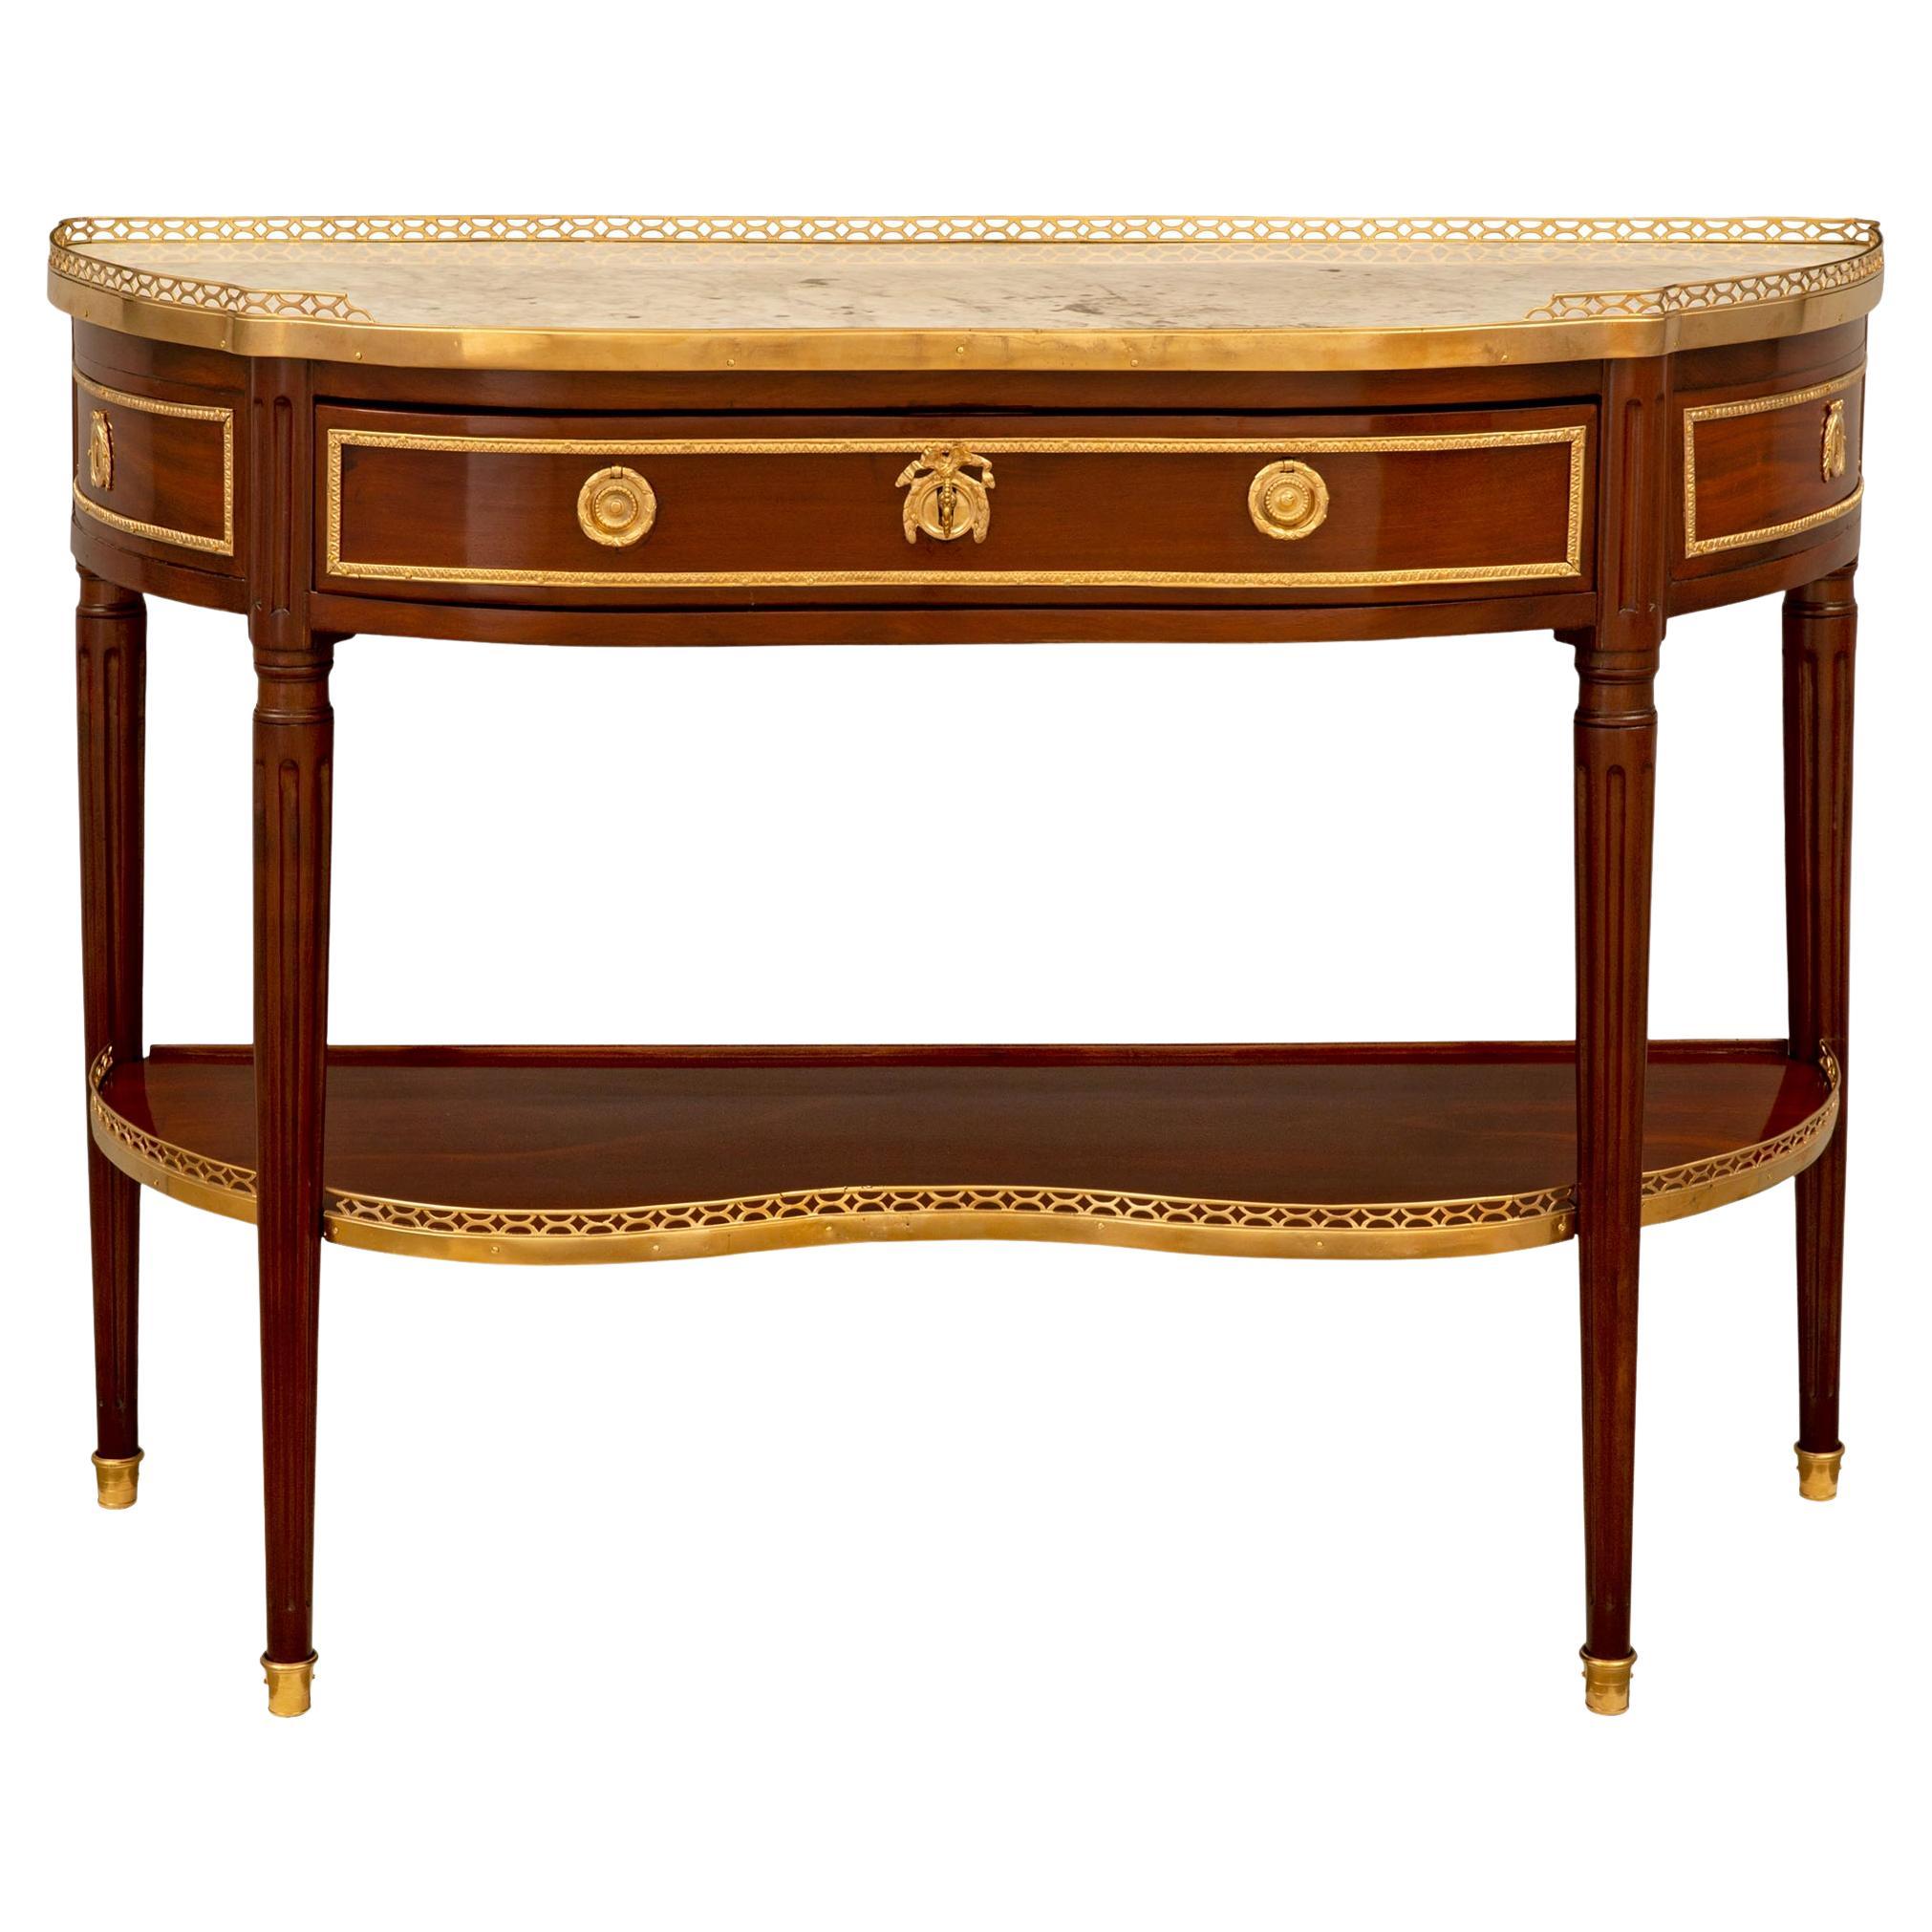 French 18th Century Louis XVI Period Console Table, Signed J. Caumont JME For Sale